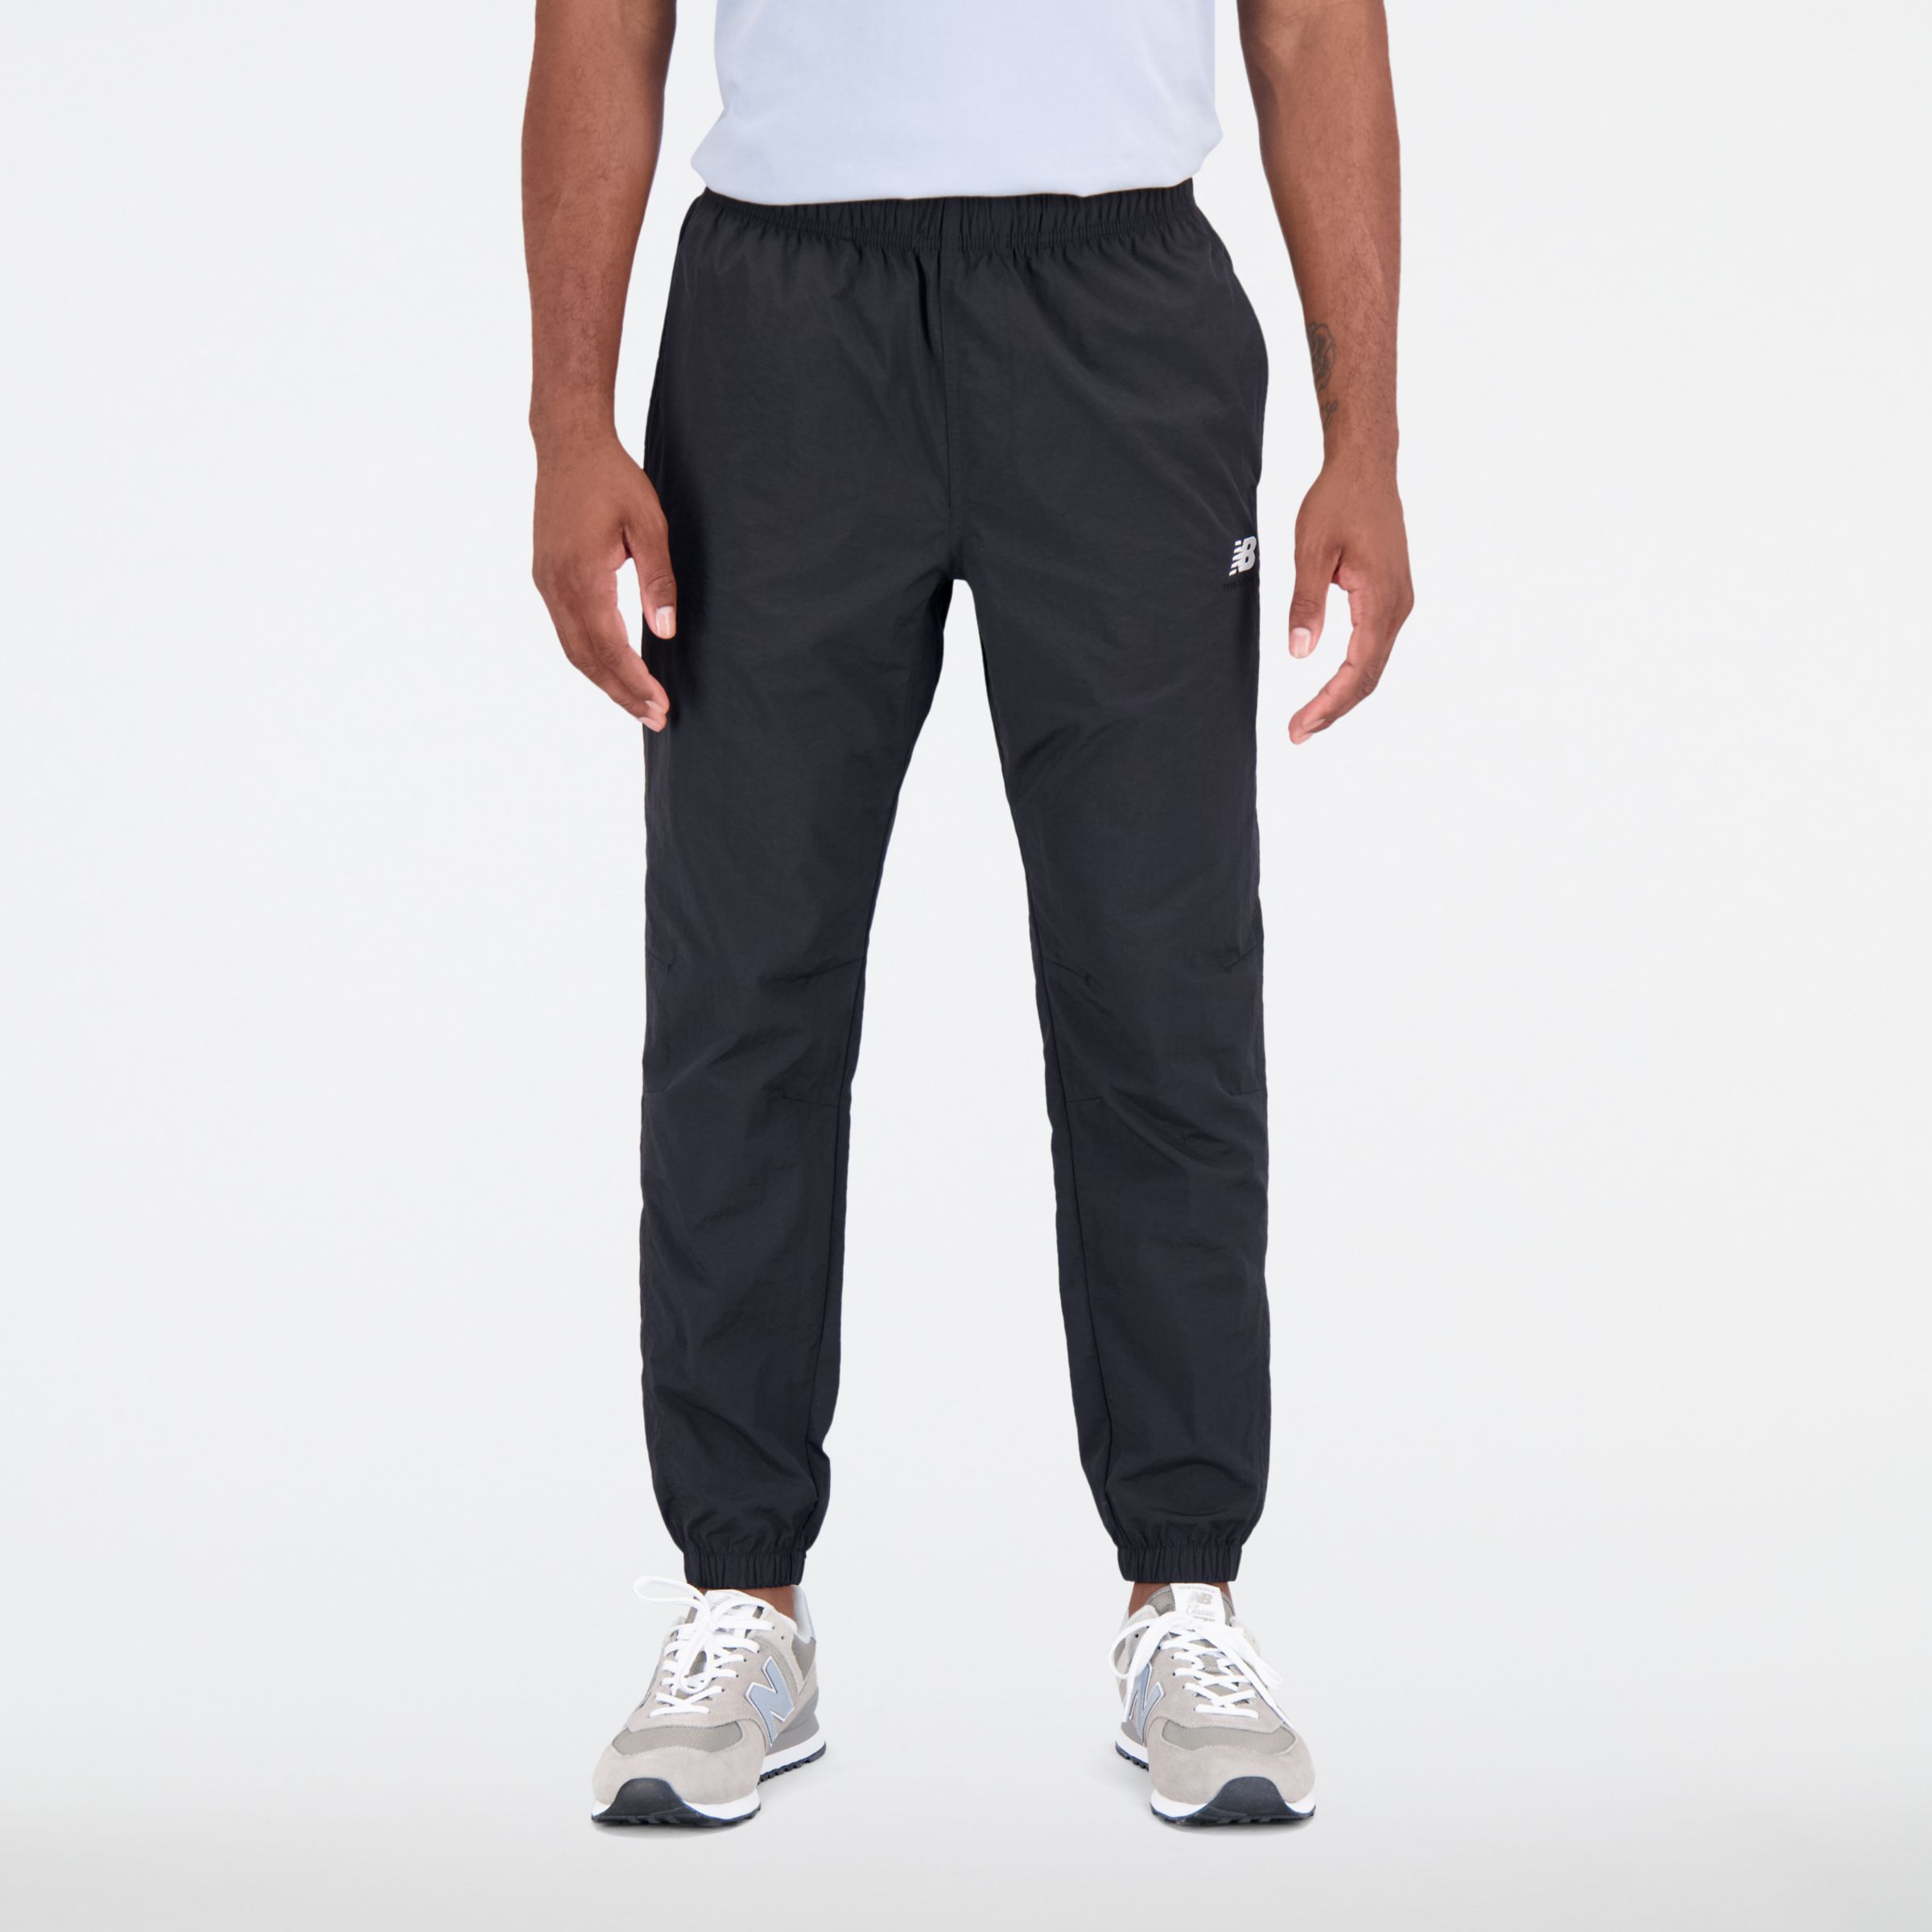 

New Balance Men's Sport Essentials Premium Woven Pant Black - Black